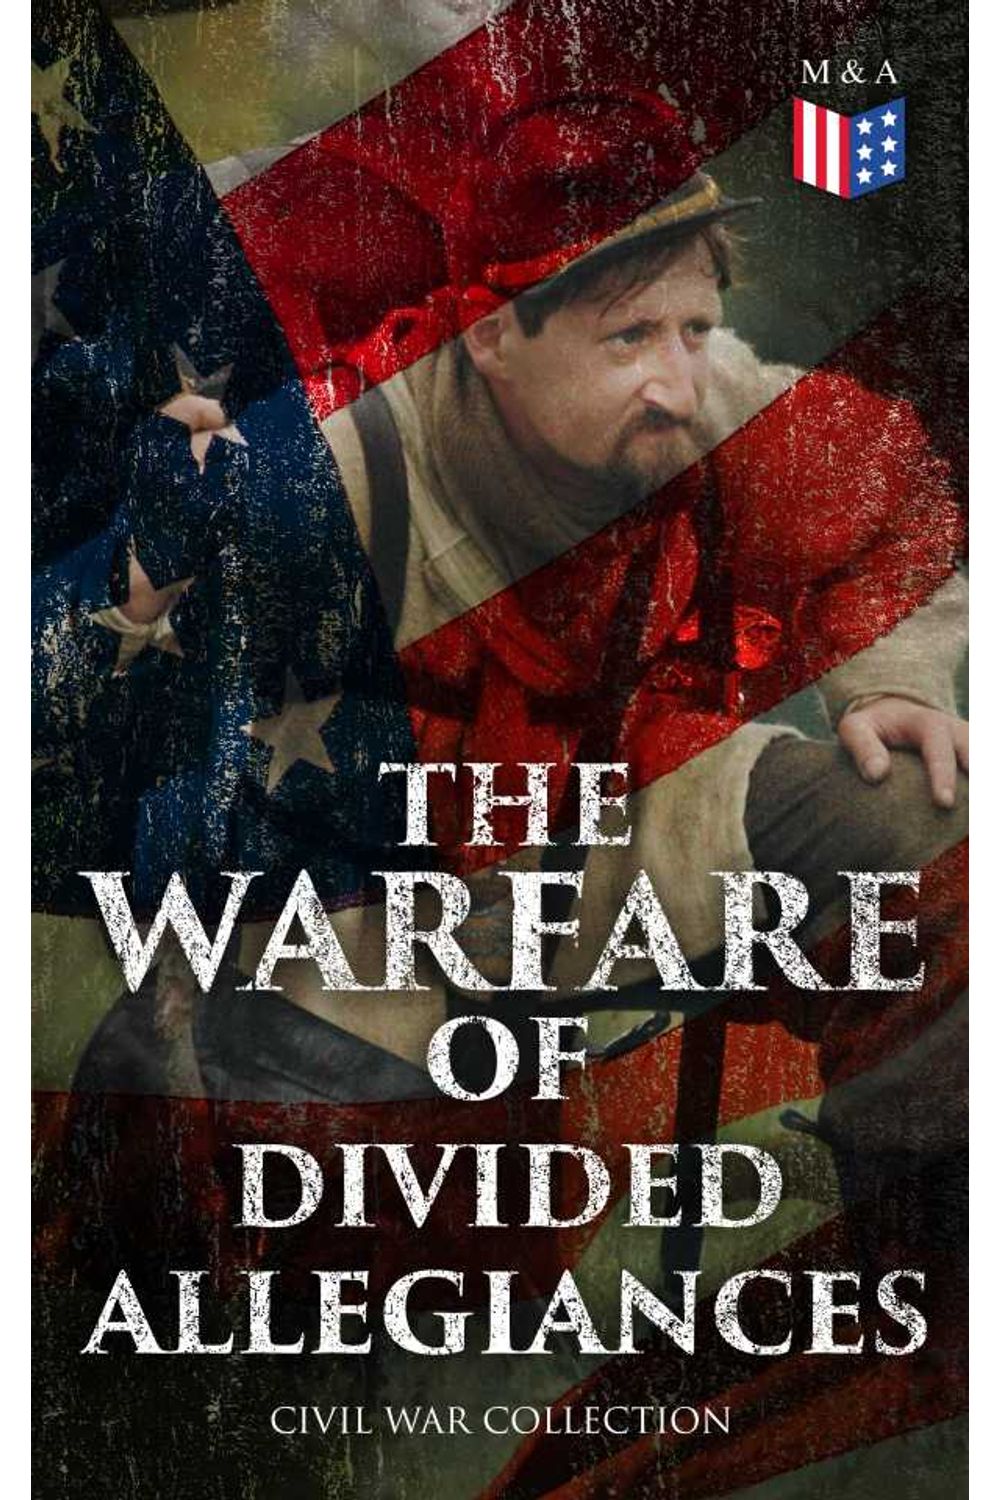 bw-the-warfare-of-divided-allegiances-civil-war-collection-madison-adams-press-4064066383299